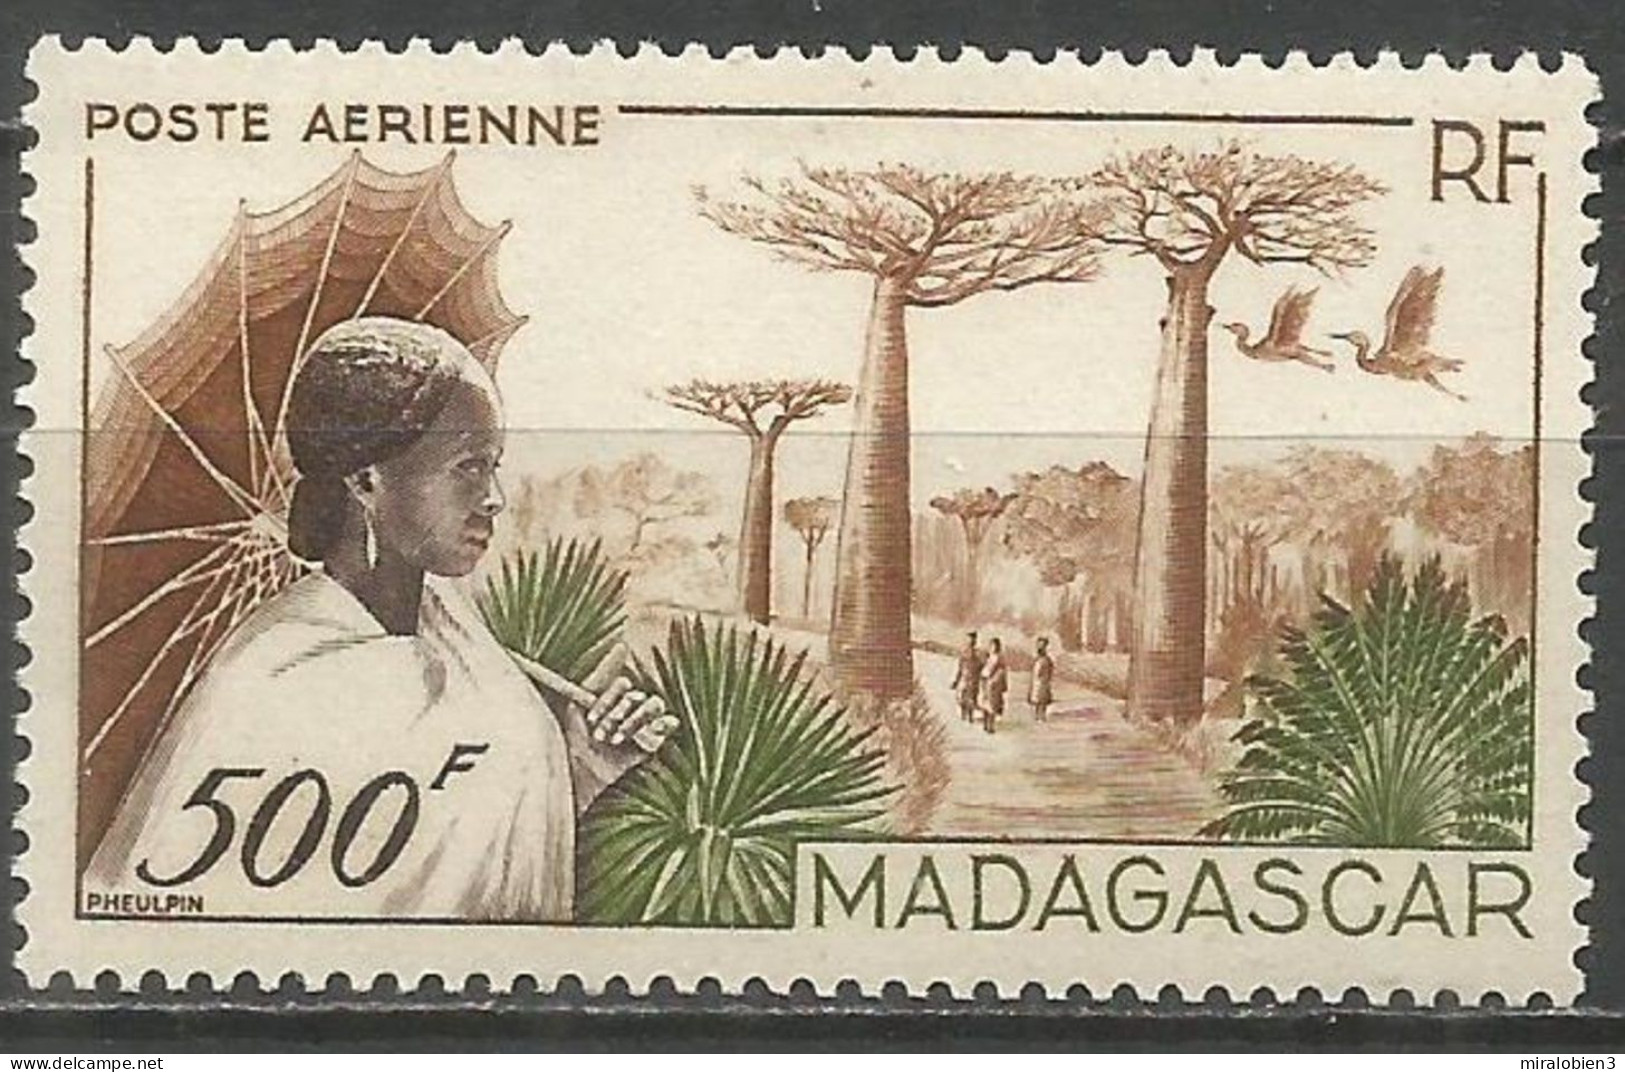 MADAGASCAR CORREO AEREO YVERT NUM. 73 * SERIE COMPLETA CON FIJASELLOS - Poste Aérienne